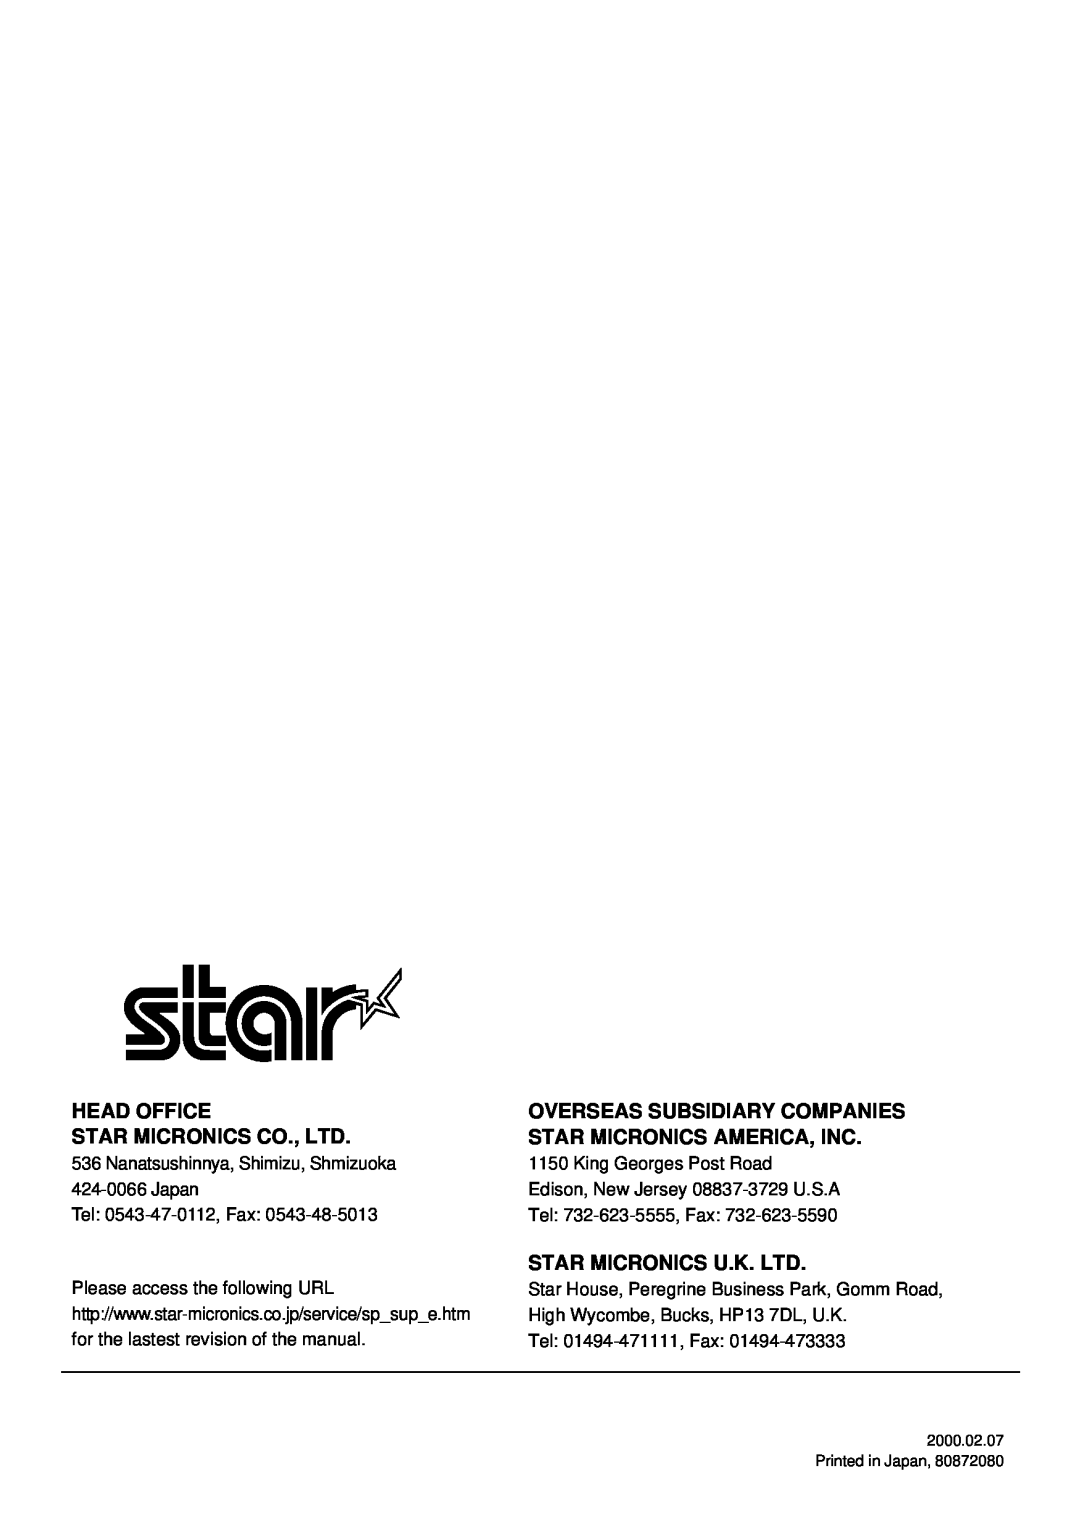 Star Micronics SP2000 manual Nanatsushinnya, Shimizu, Shmizuoka, King Georges Post Road, Japan, Tel 0543-47-0112, Fax 